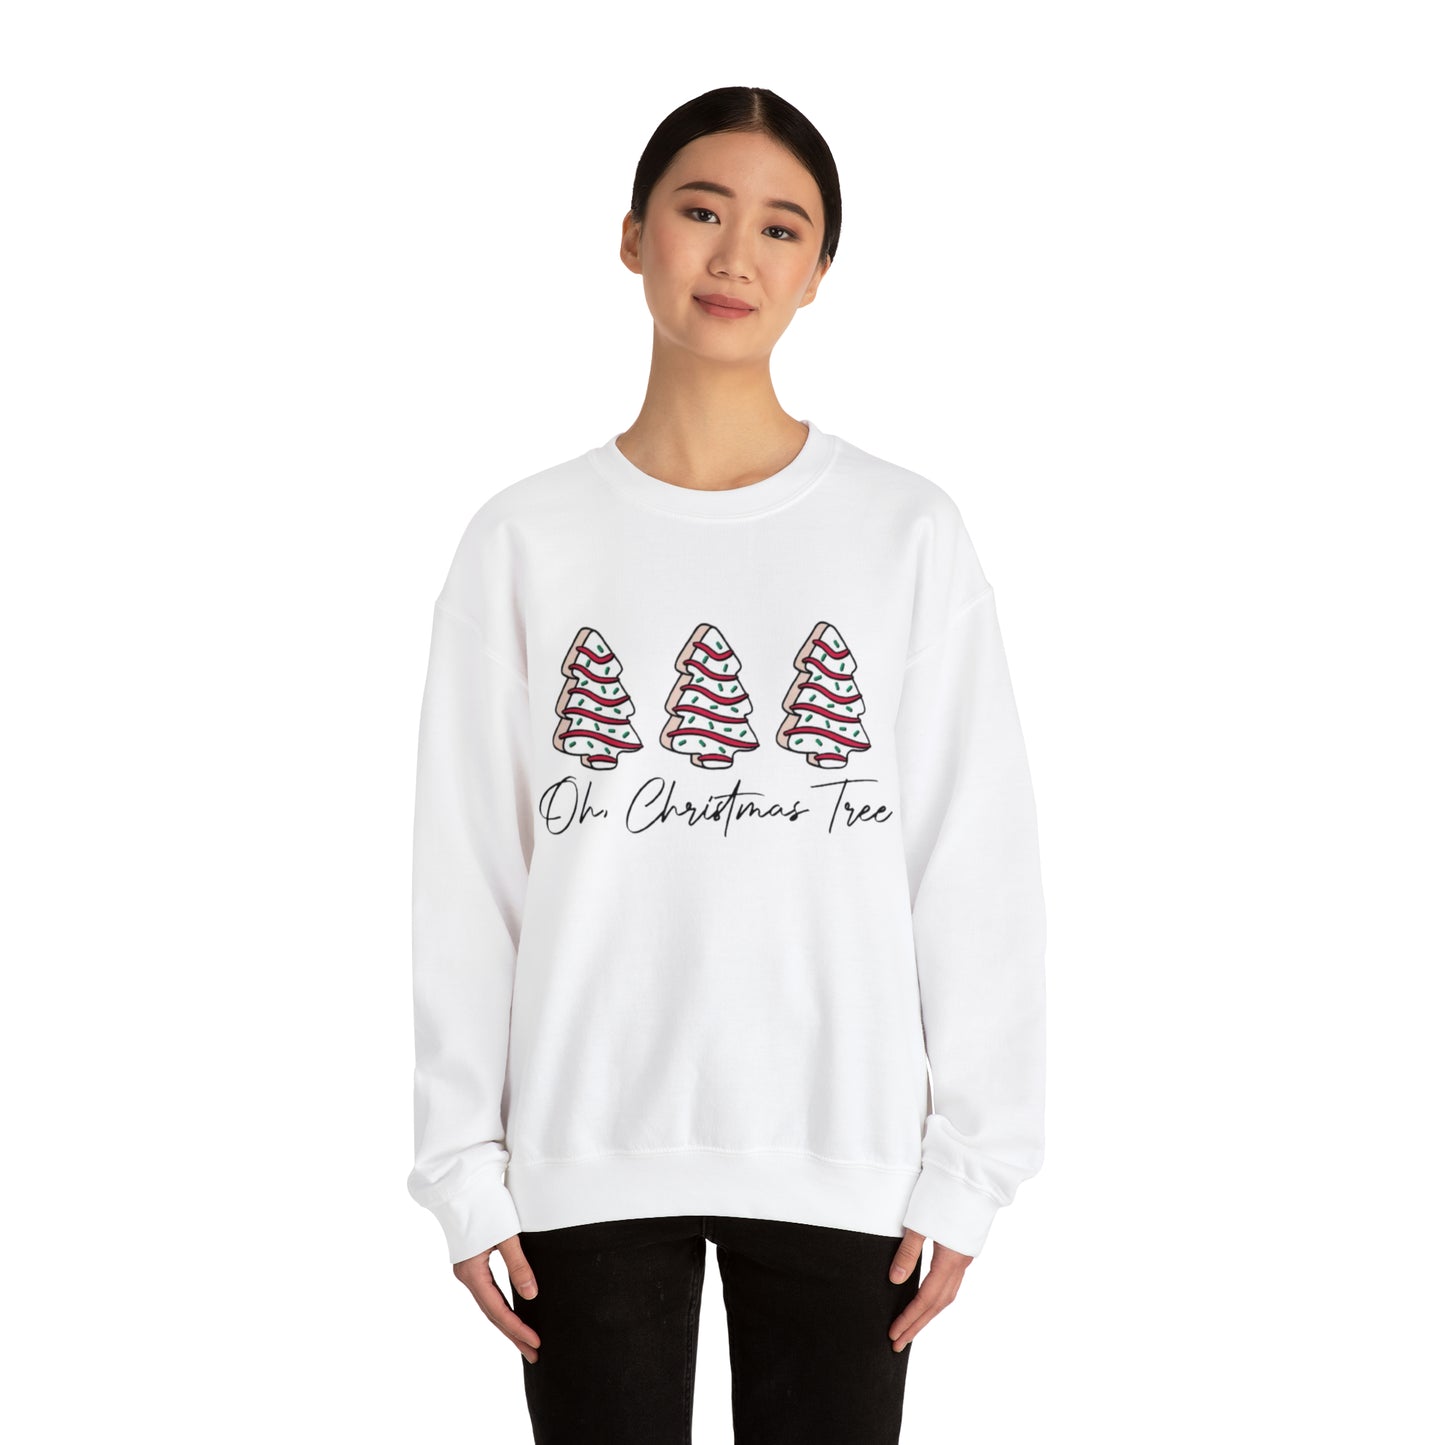 Oh Christmas Tree Unisex Heavy Blend Crewneck Sweatshirt